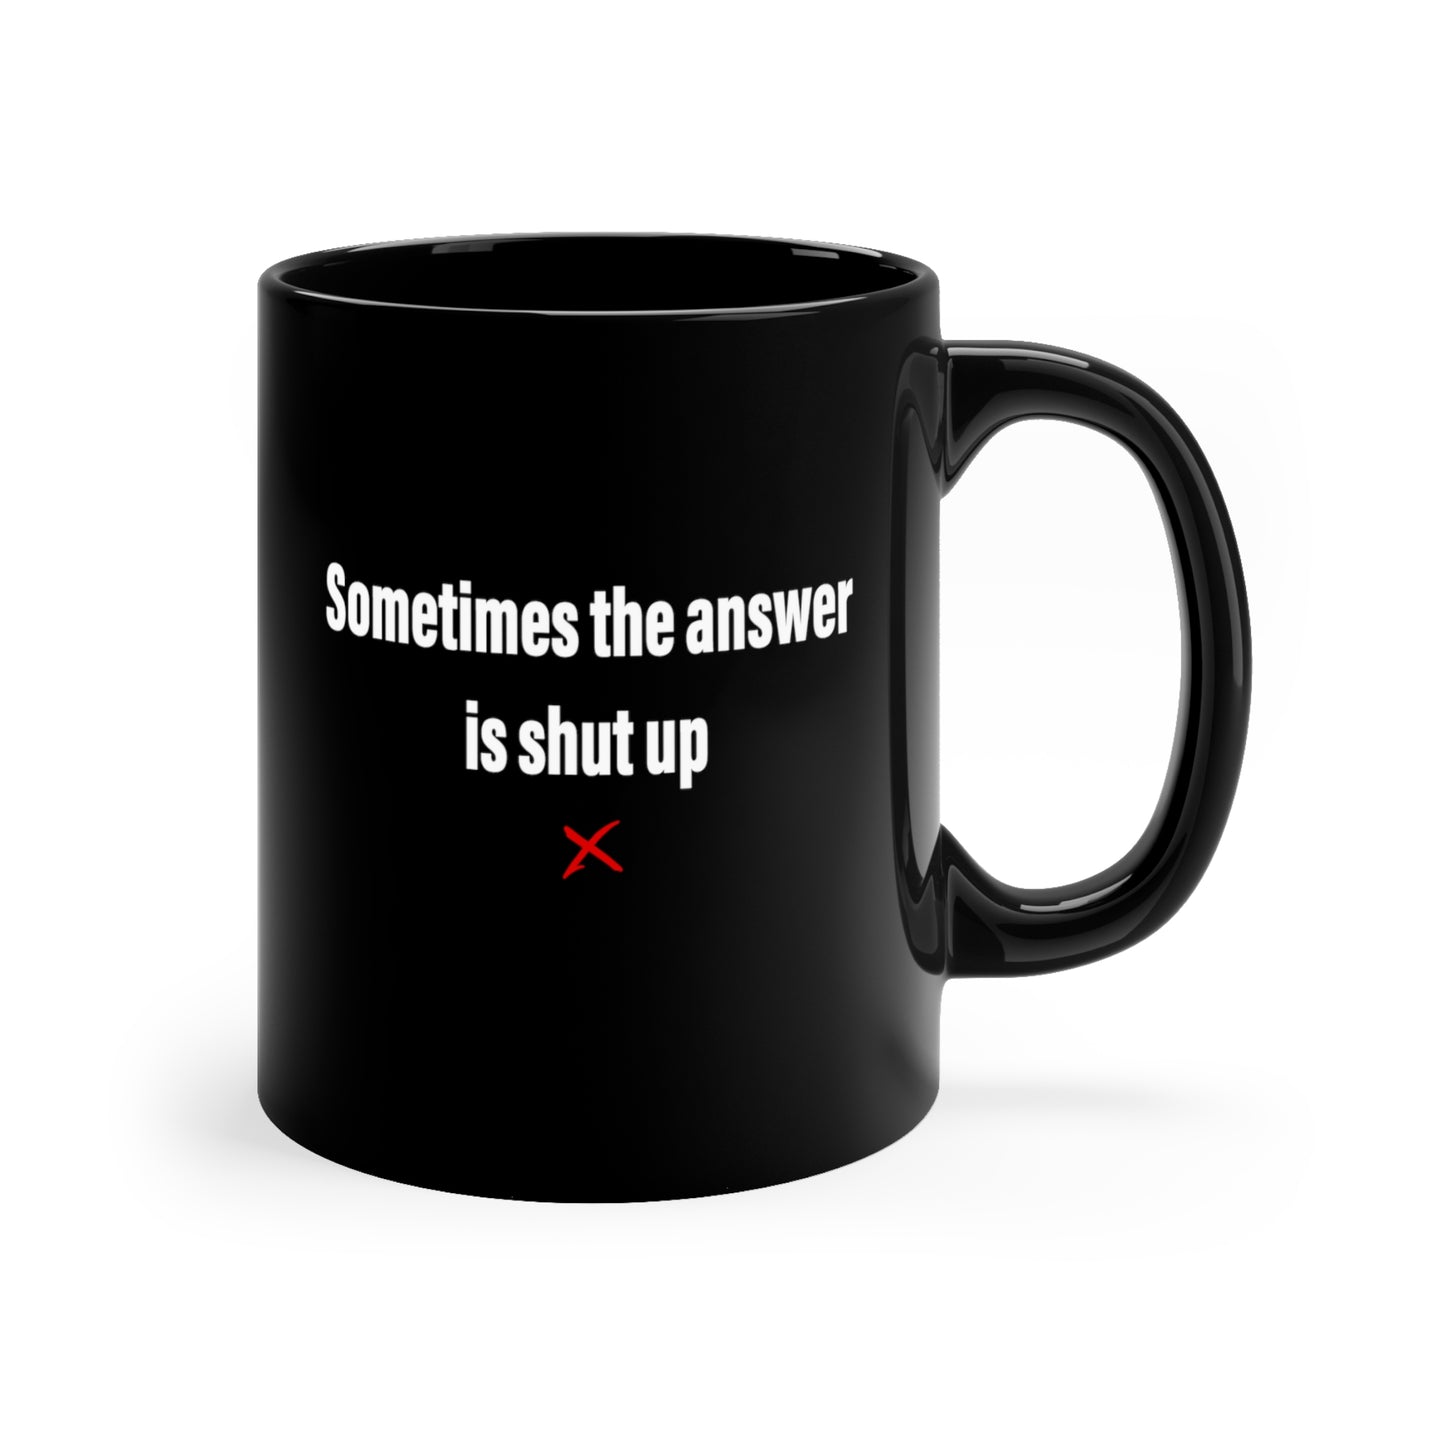 Sometimes the answer is shut up - Mug